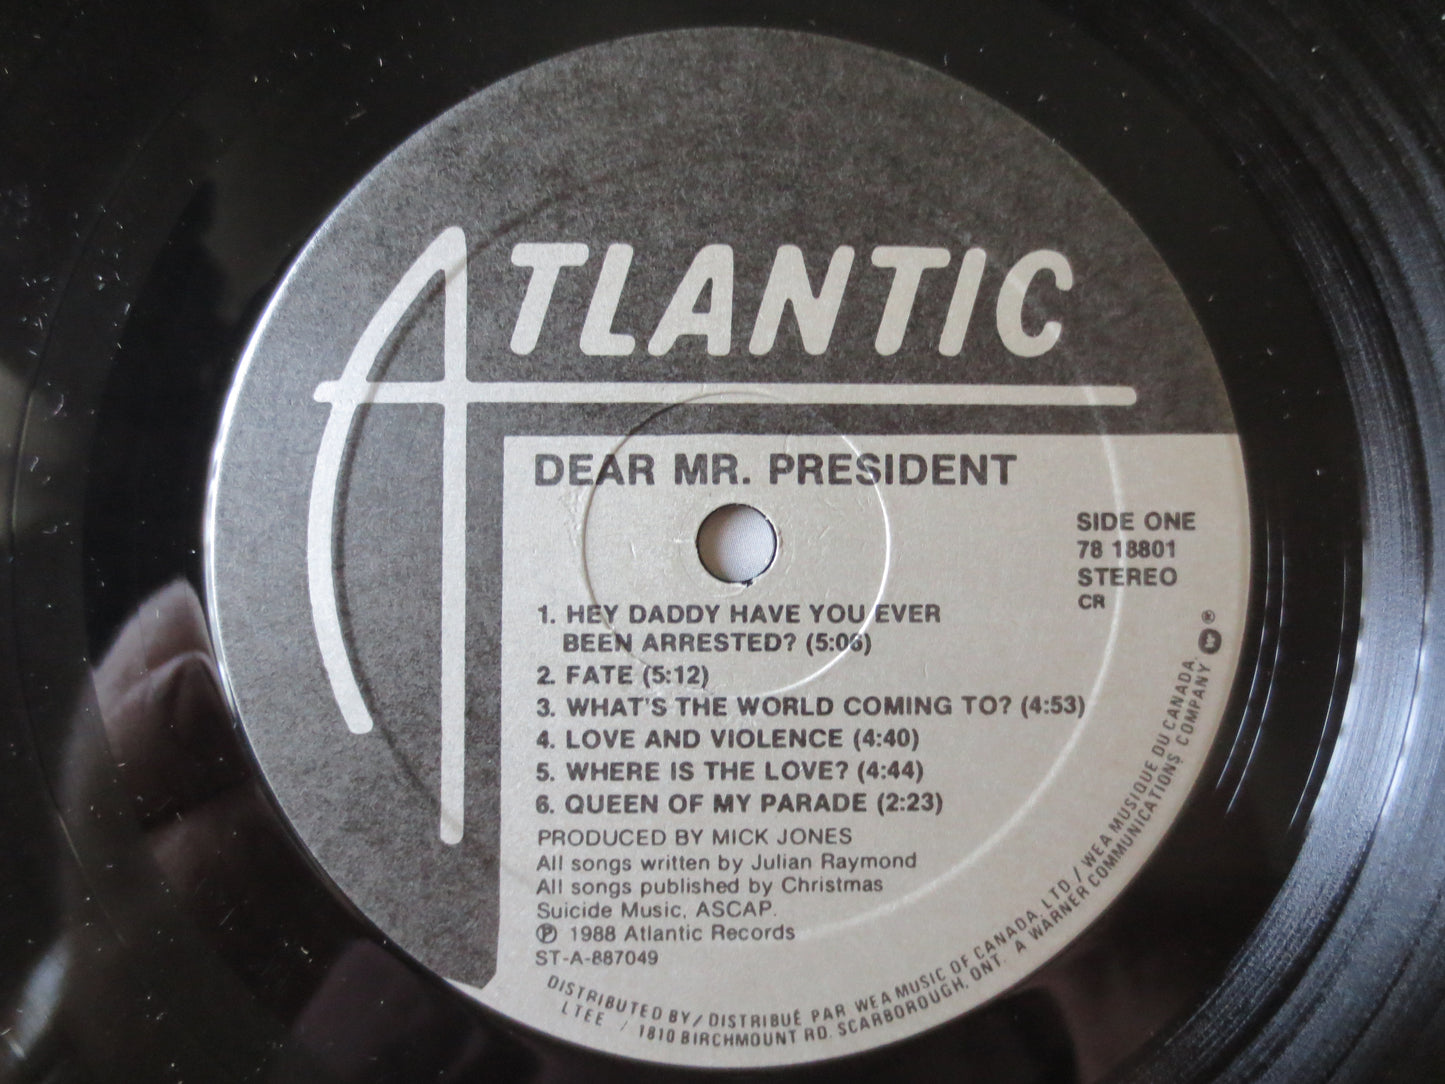 DEAR Mr PRESIDENT, Rock Records, lps, Vintage Vinyl, Record Vinyl, Record, Vinyl Record, Vinyl, Rock Record, 1988 Records